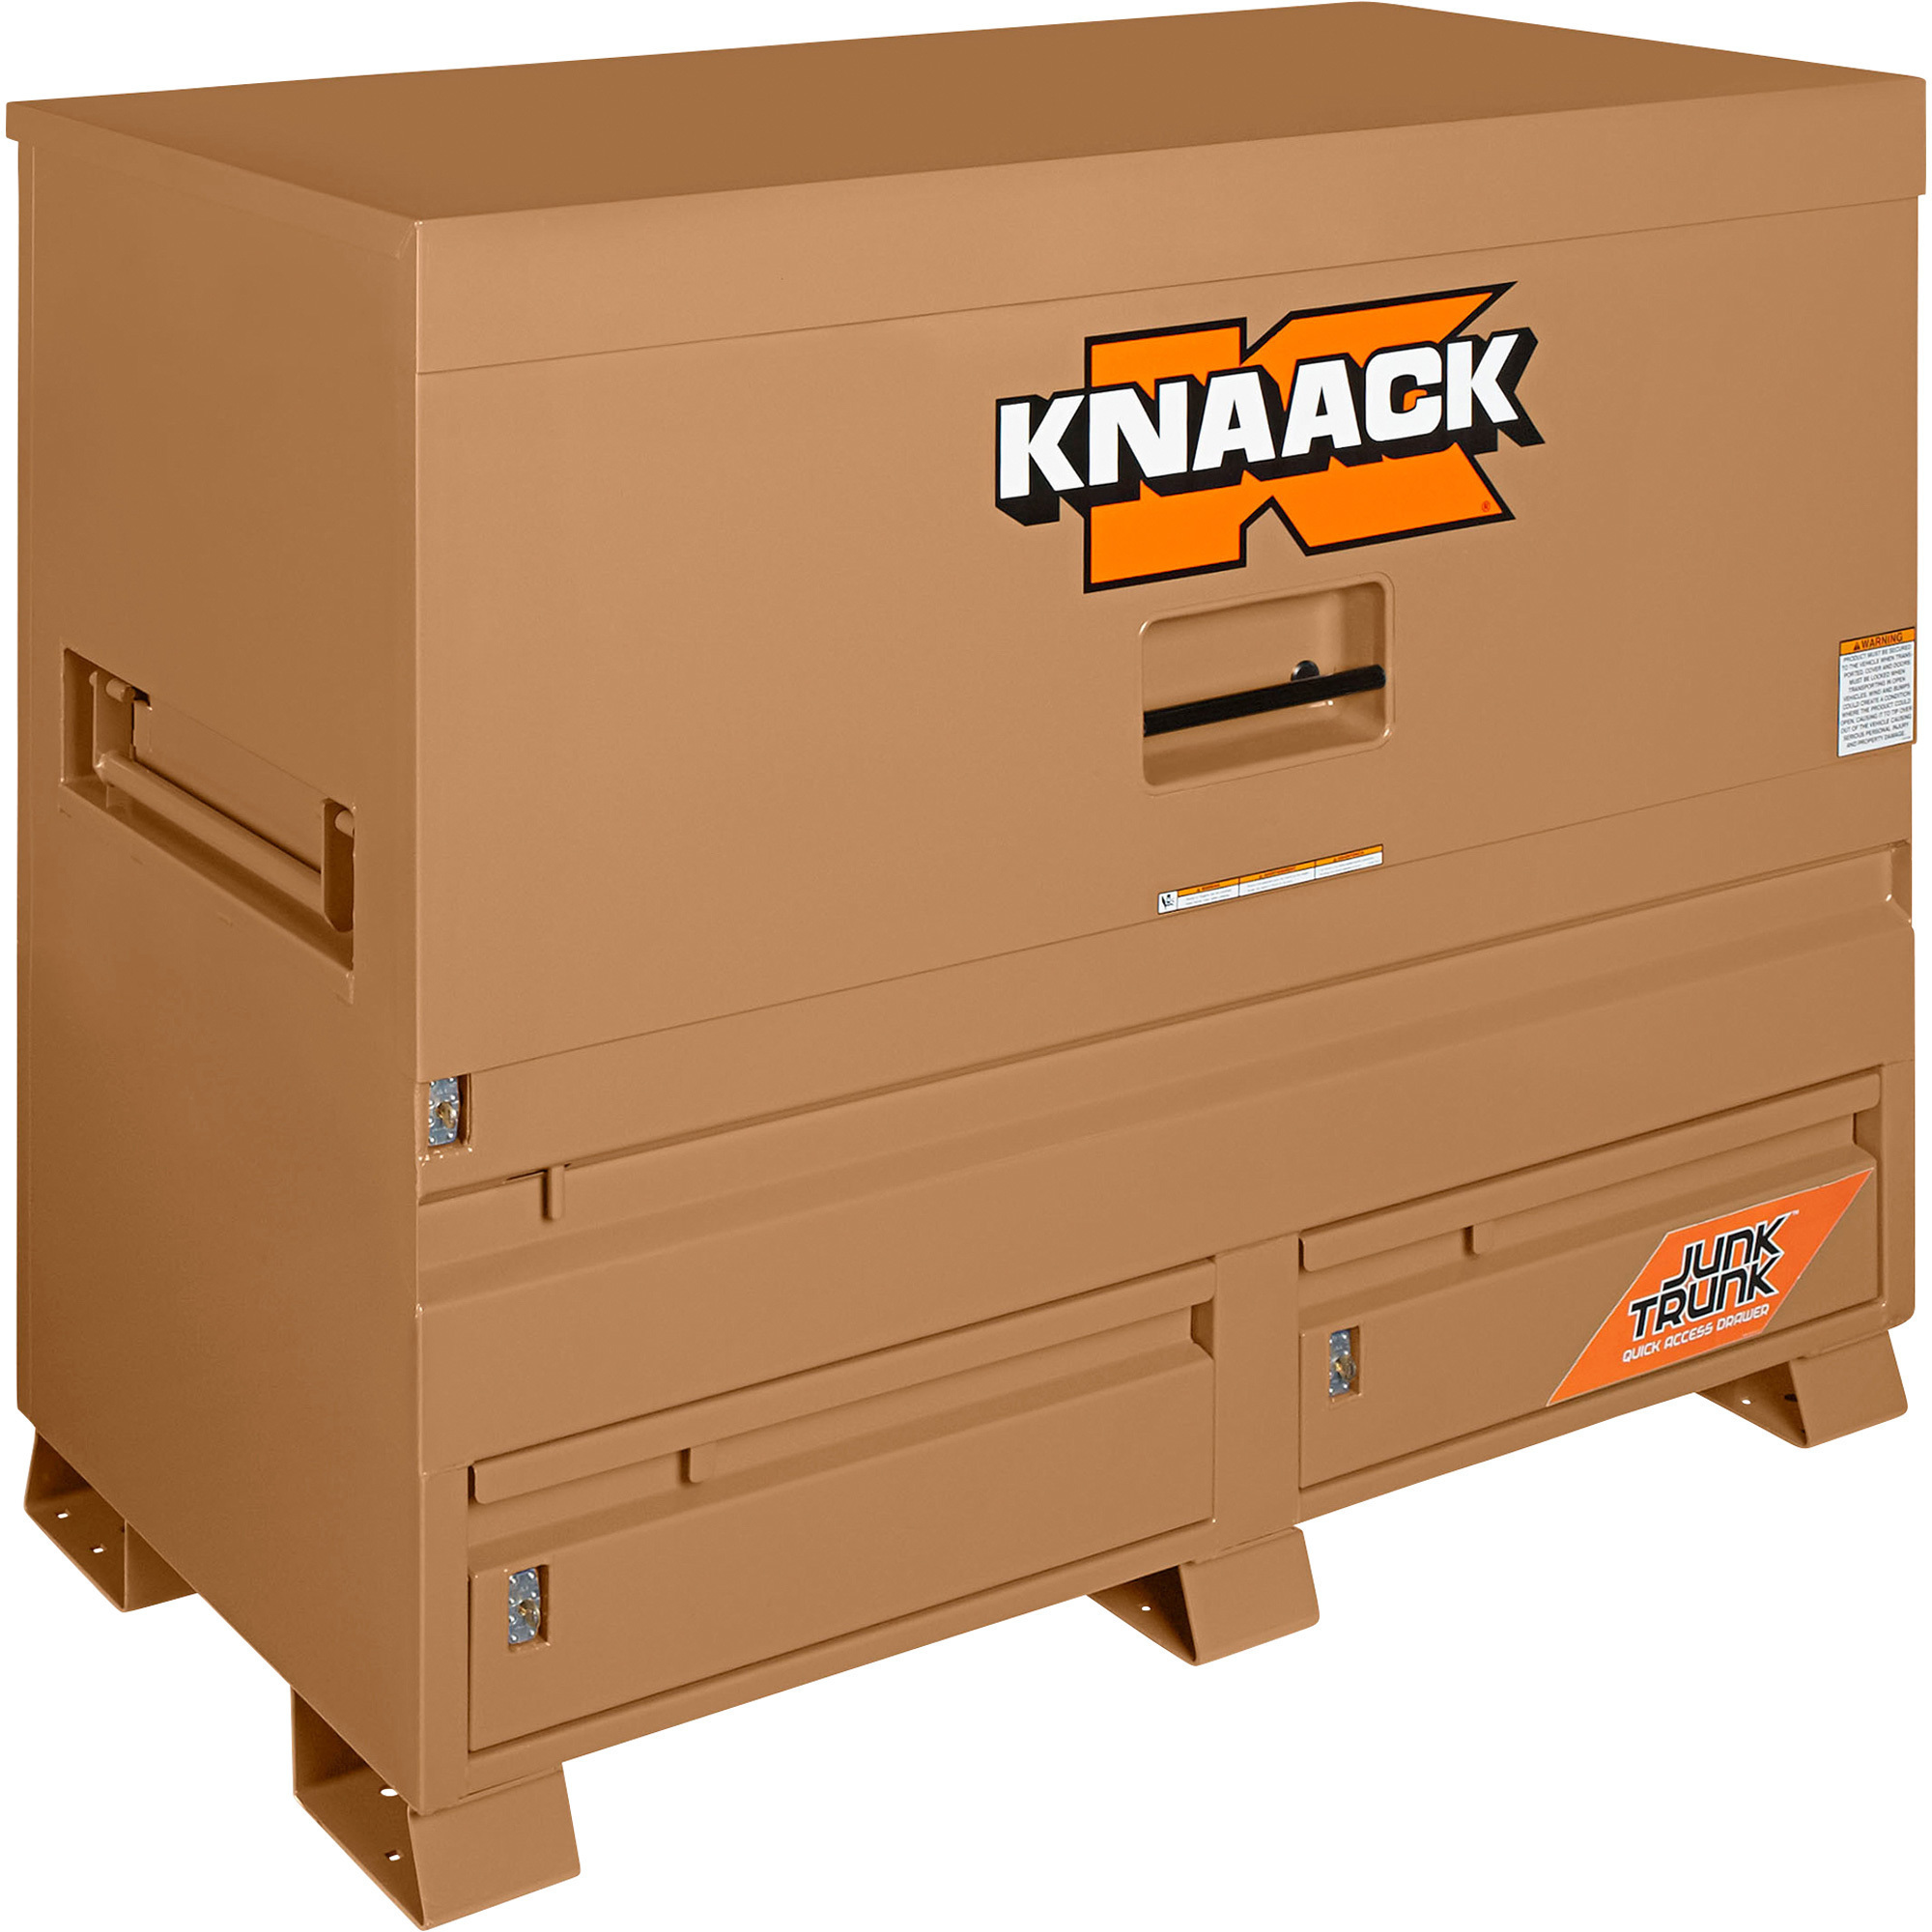 KNAACK Storagemaster Jobsite Piano Box with JunkTrunk, Tan, 43.8 Cu. Ft., 60Inch W x 30Inch D x 49Inch H, Model 89-D